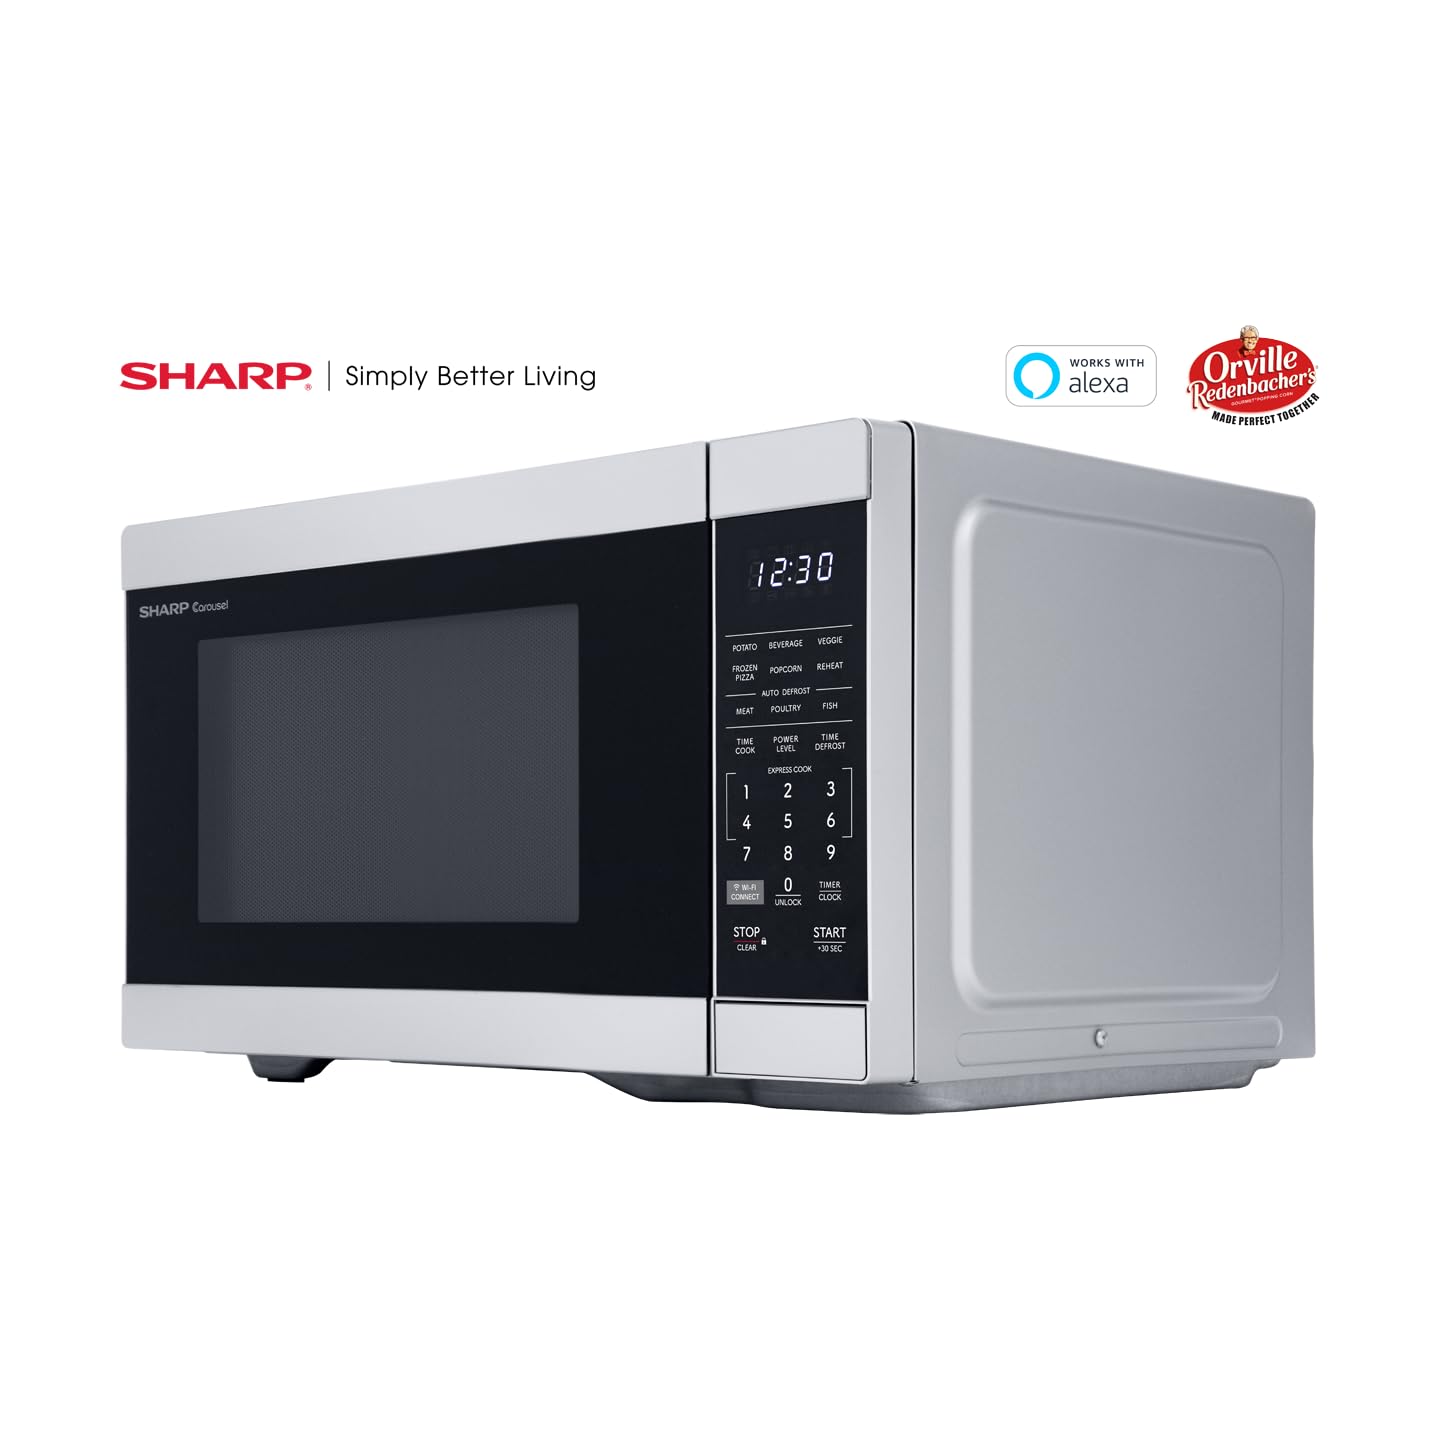 SHARP ZSMC1169KS Oven Countertop Microwave, 1.1 CuFt, Stainless Steel